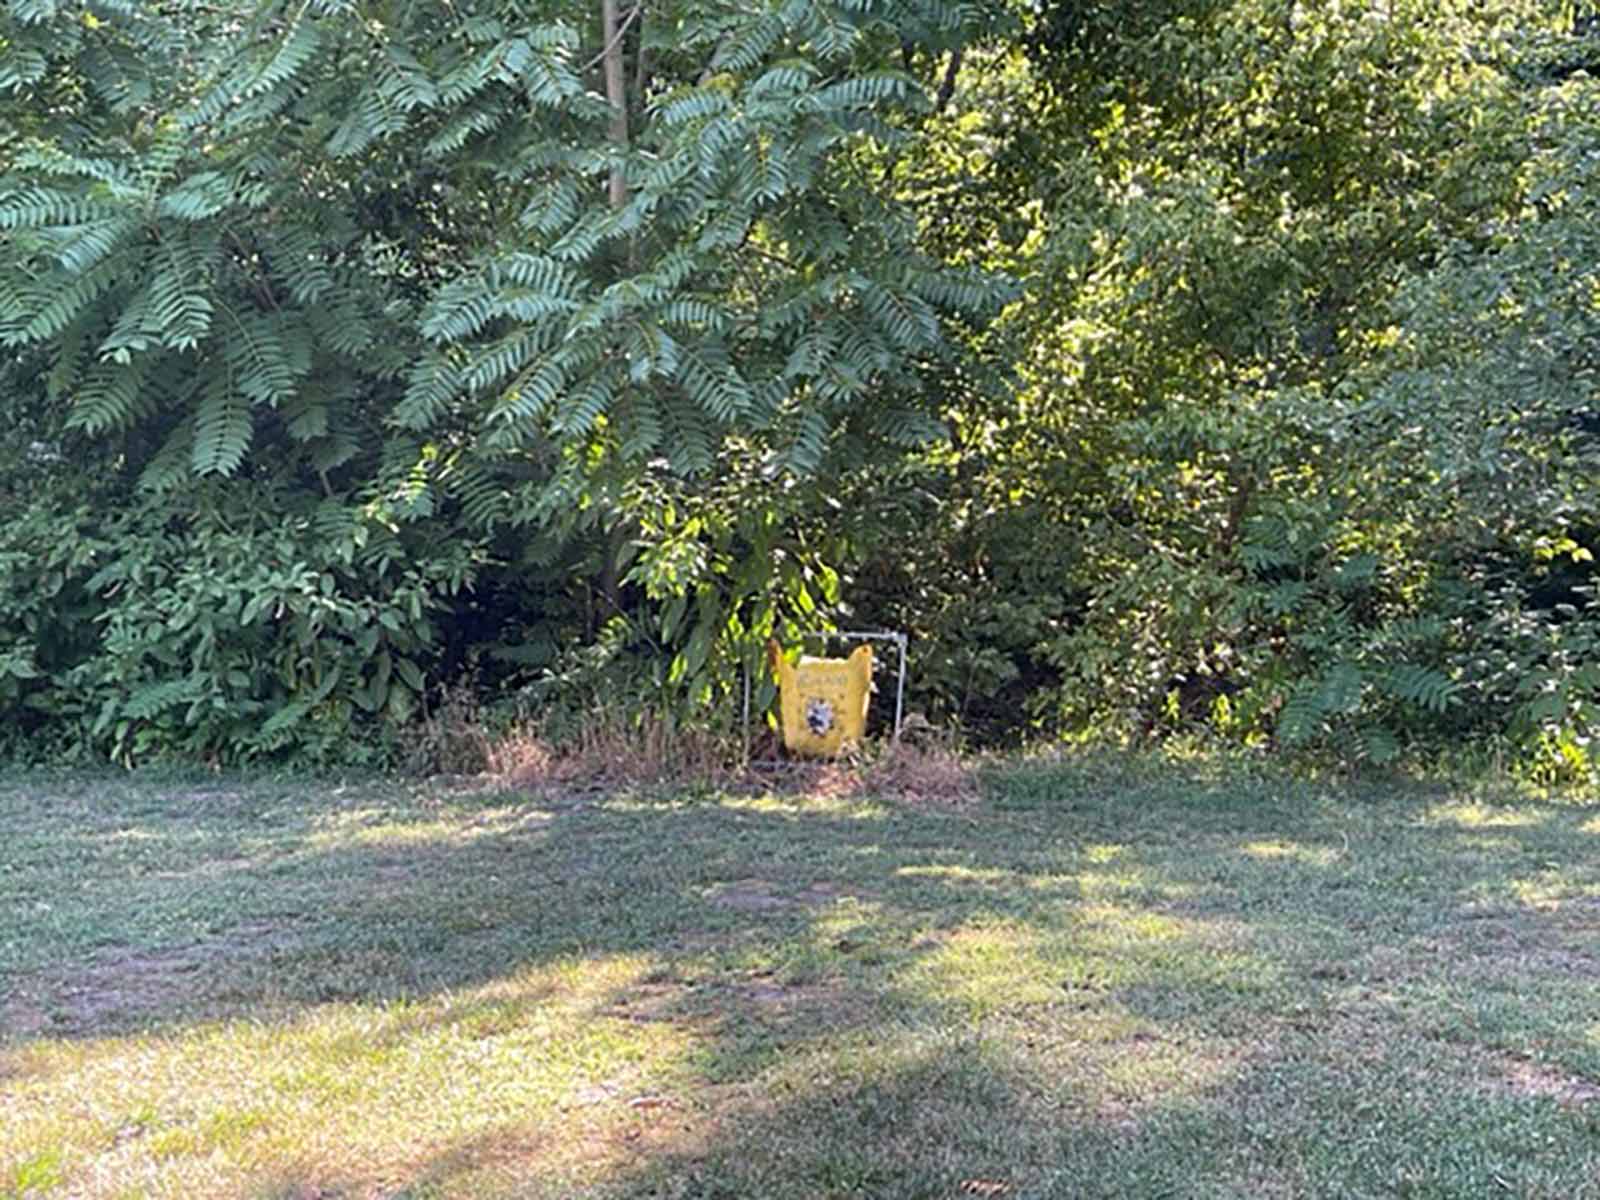 bag target at the archery range